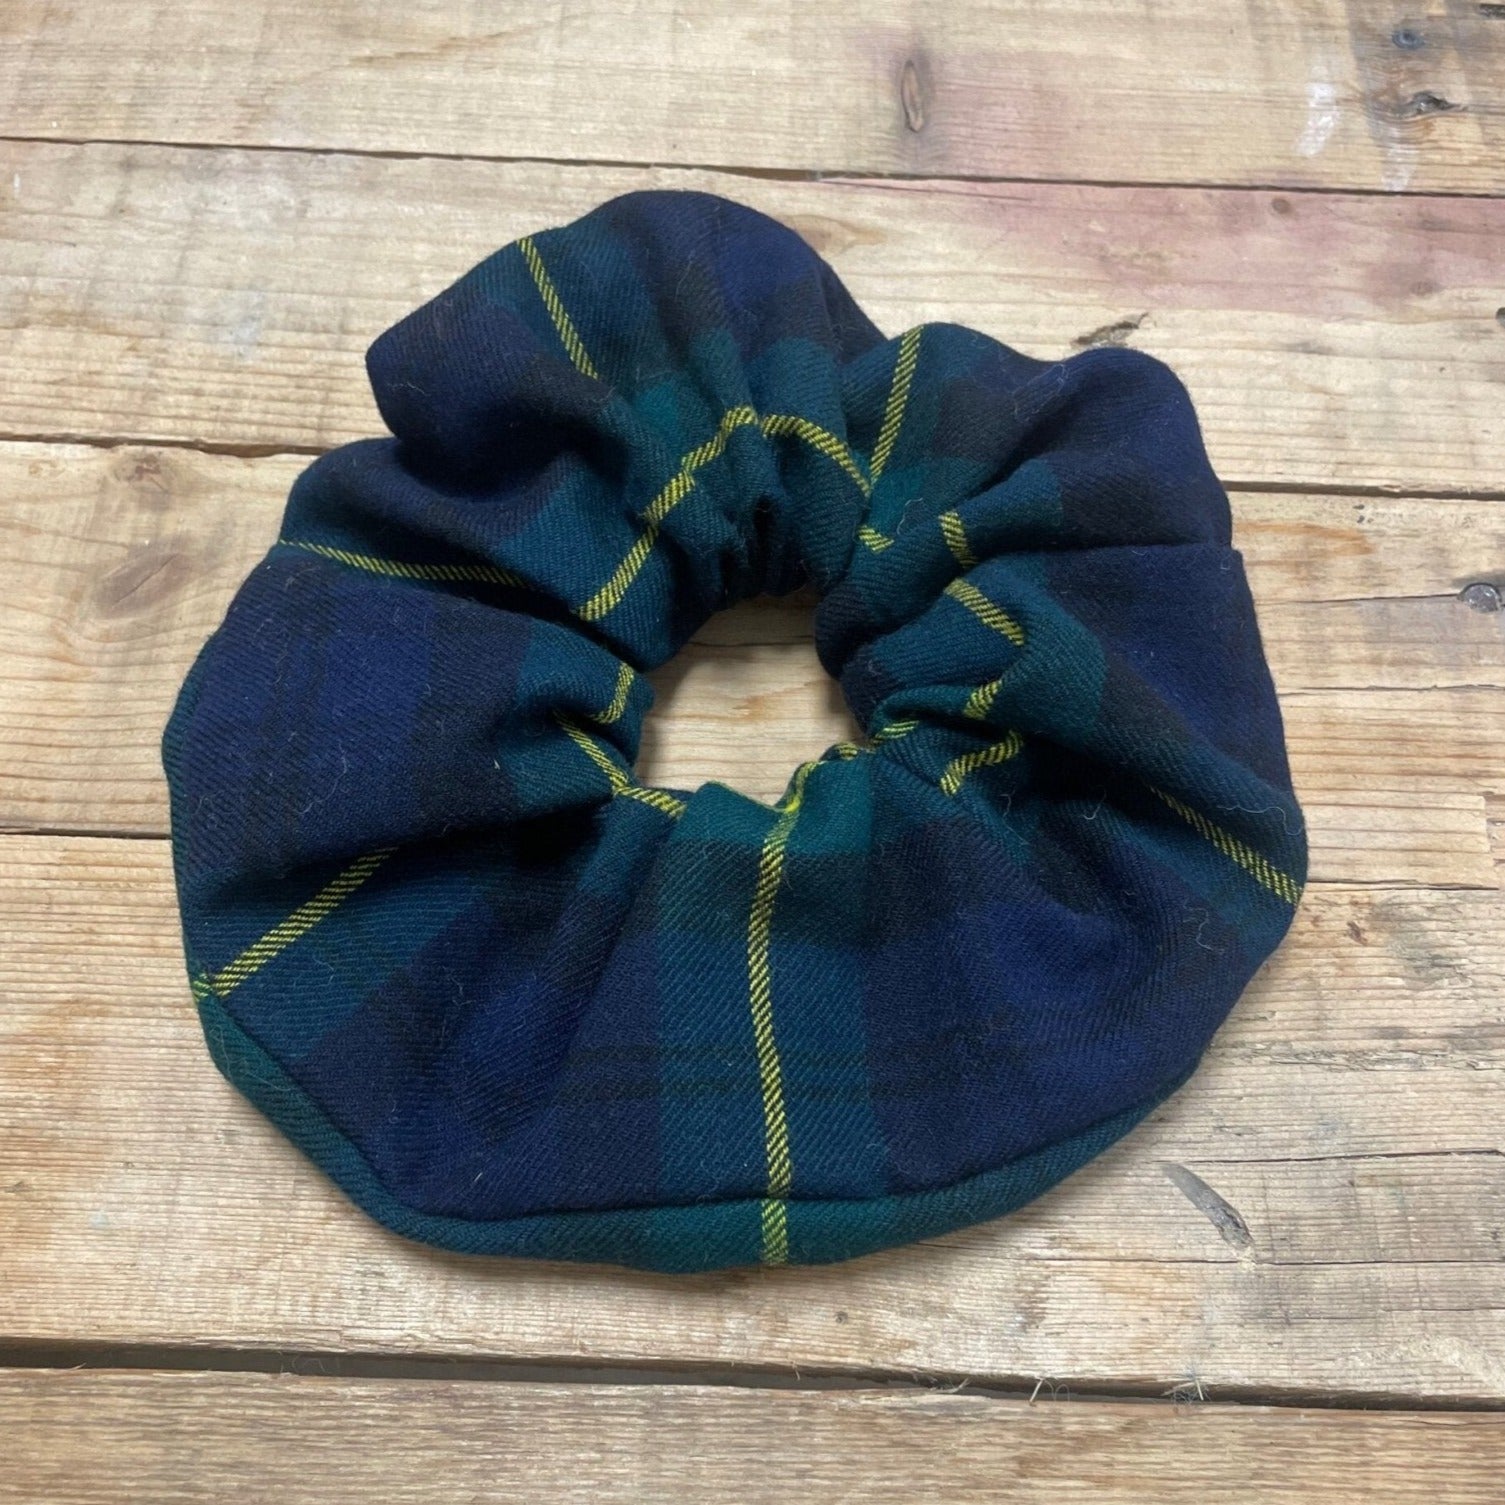 x1 Ready to Ship Giant Tartan Scrunchie - Vintage Fabric - 100% Wool - Made Scotland